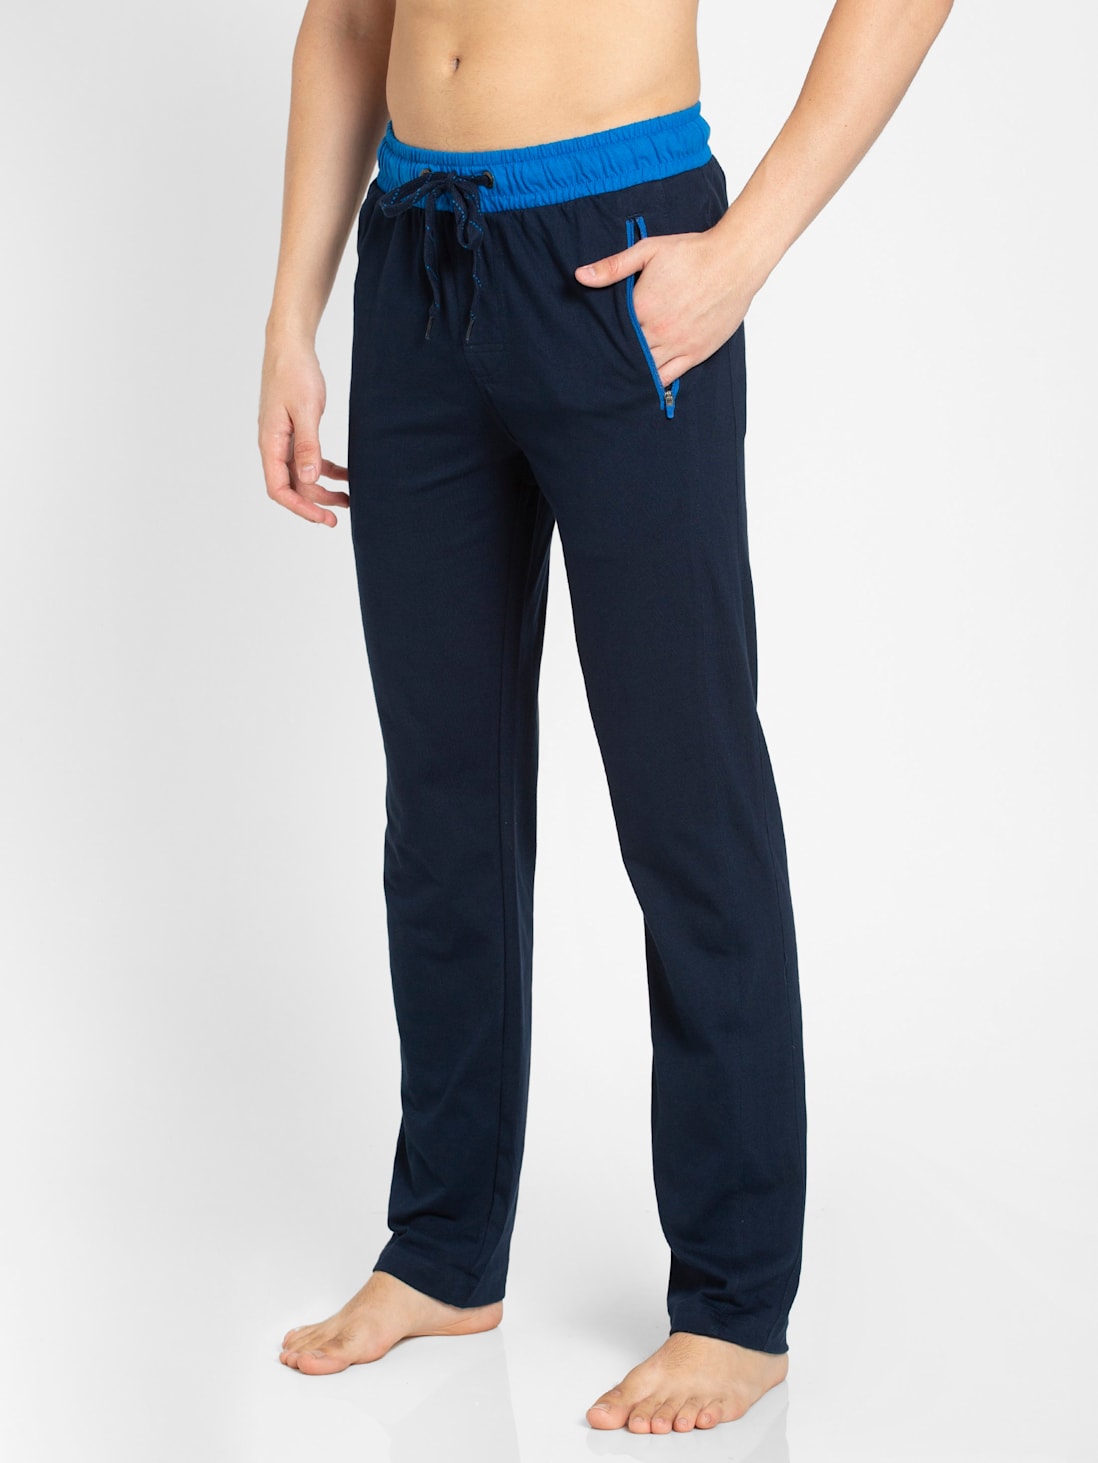 Jockey 9510 Track Pants Trouser Pajama Bottom Sleepwear Nightwear Pack Of 3  | eBay